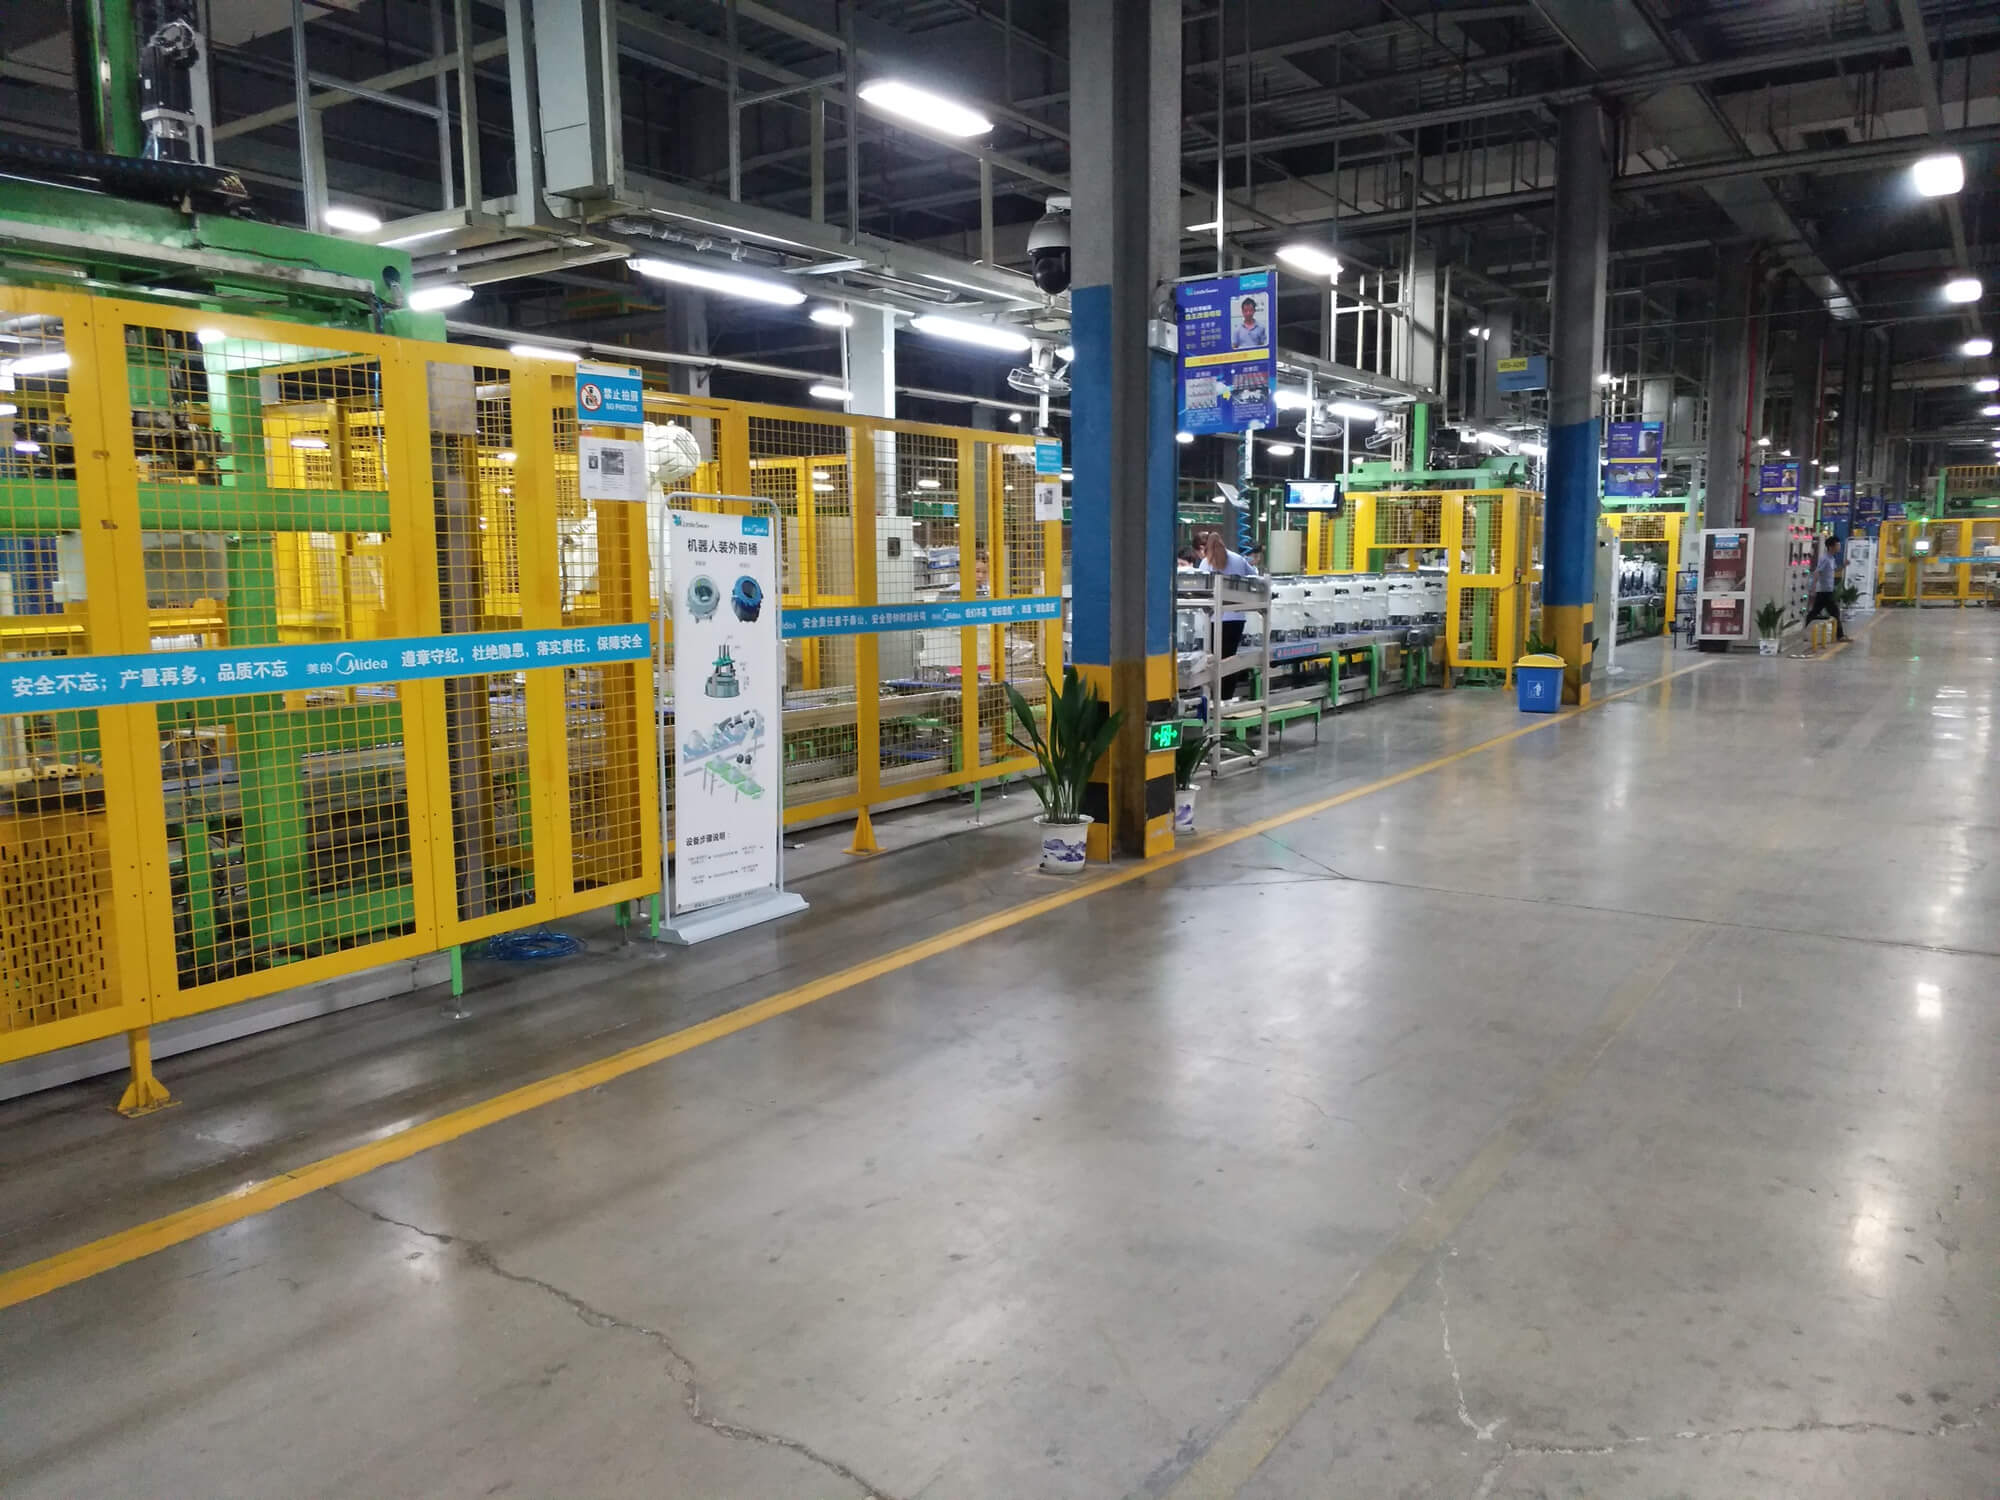 Midea production line with robots